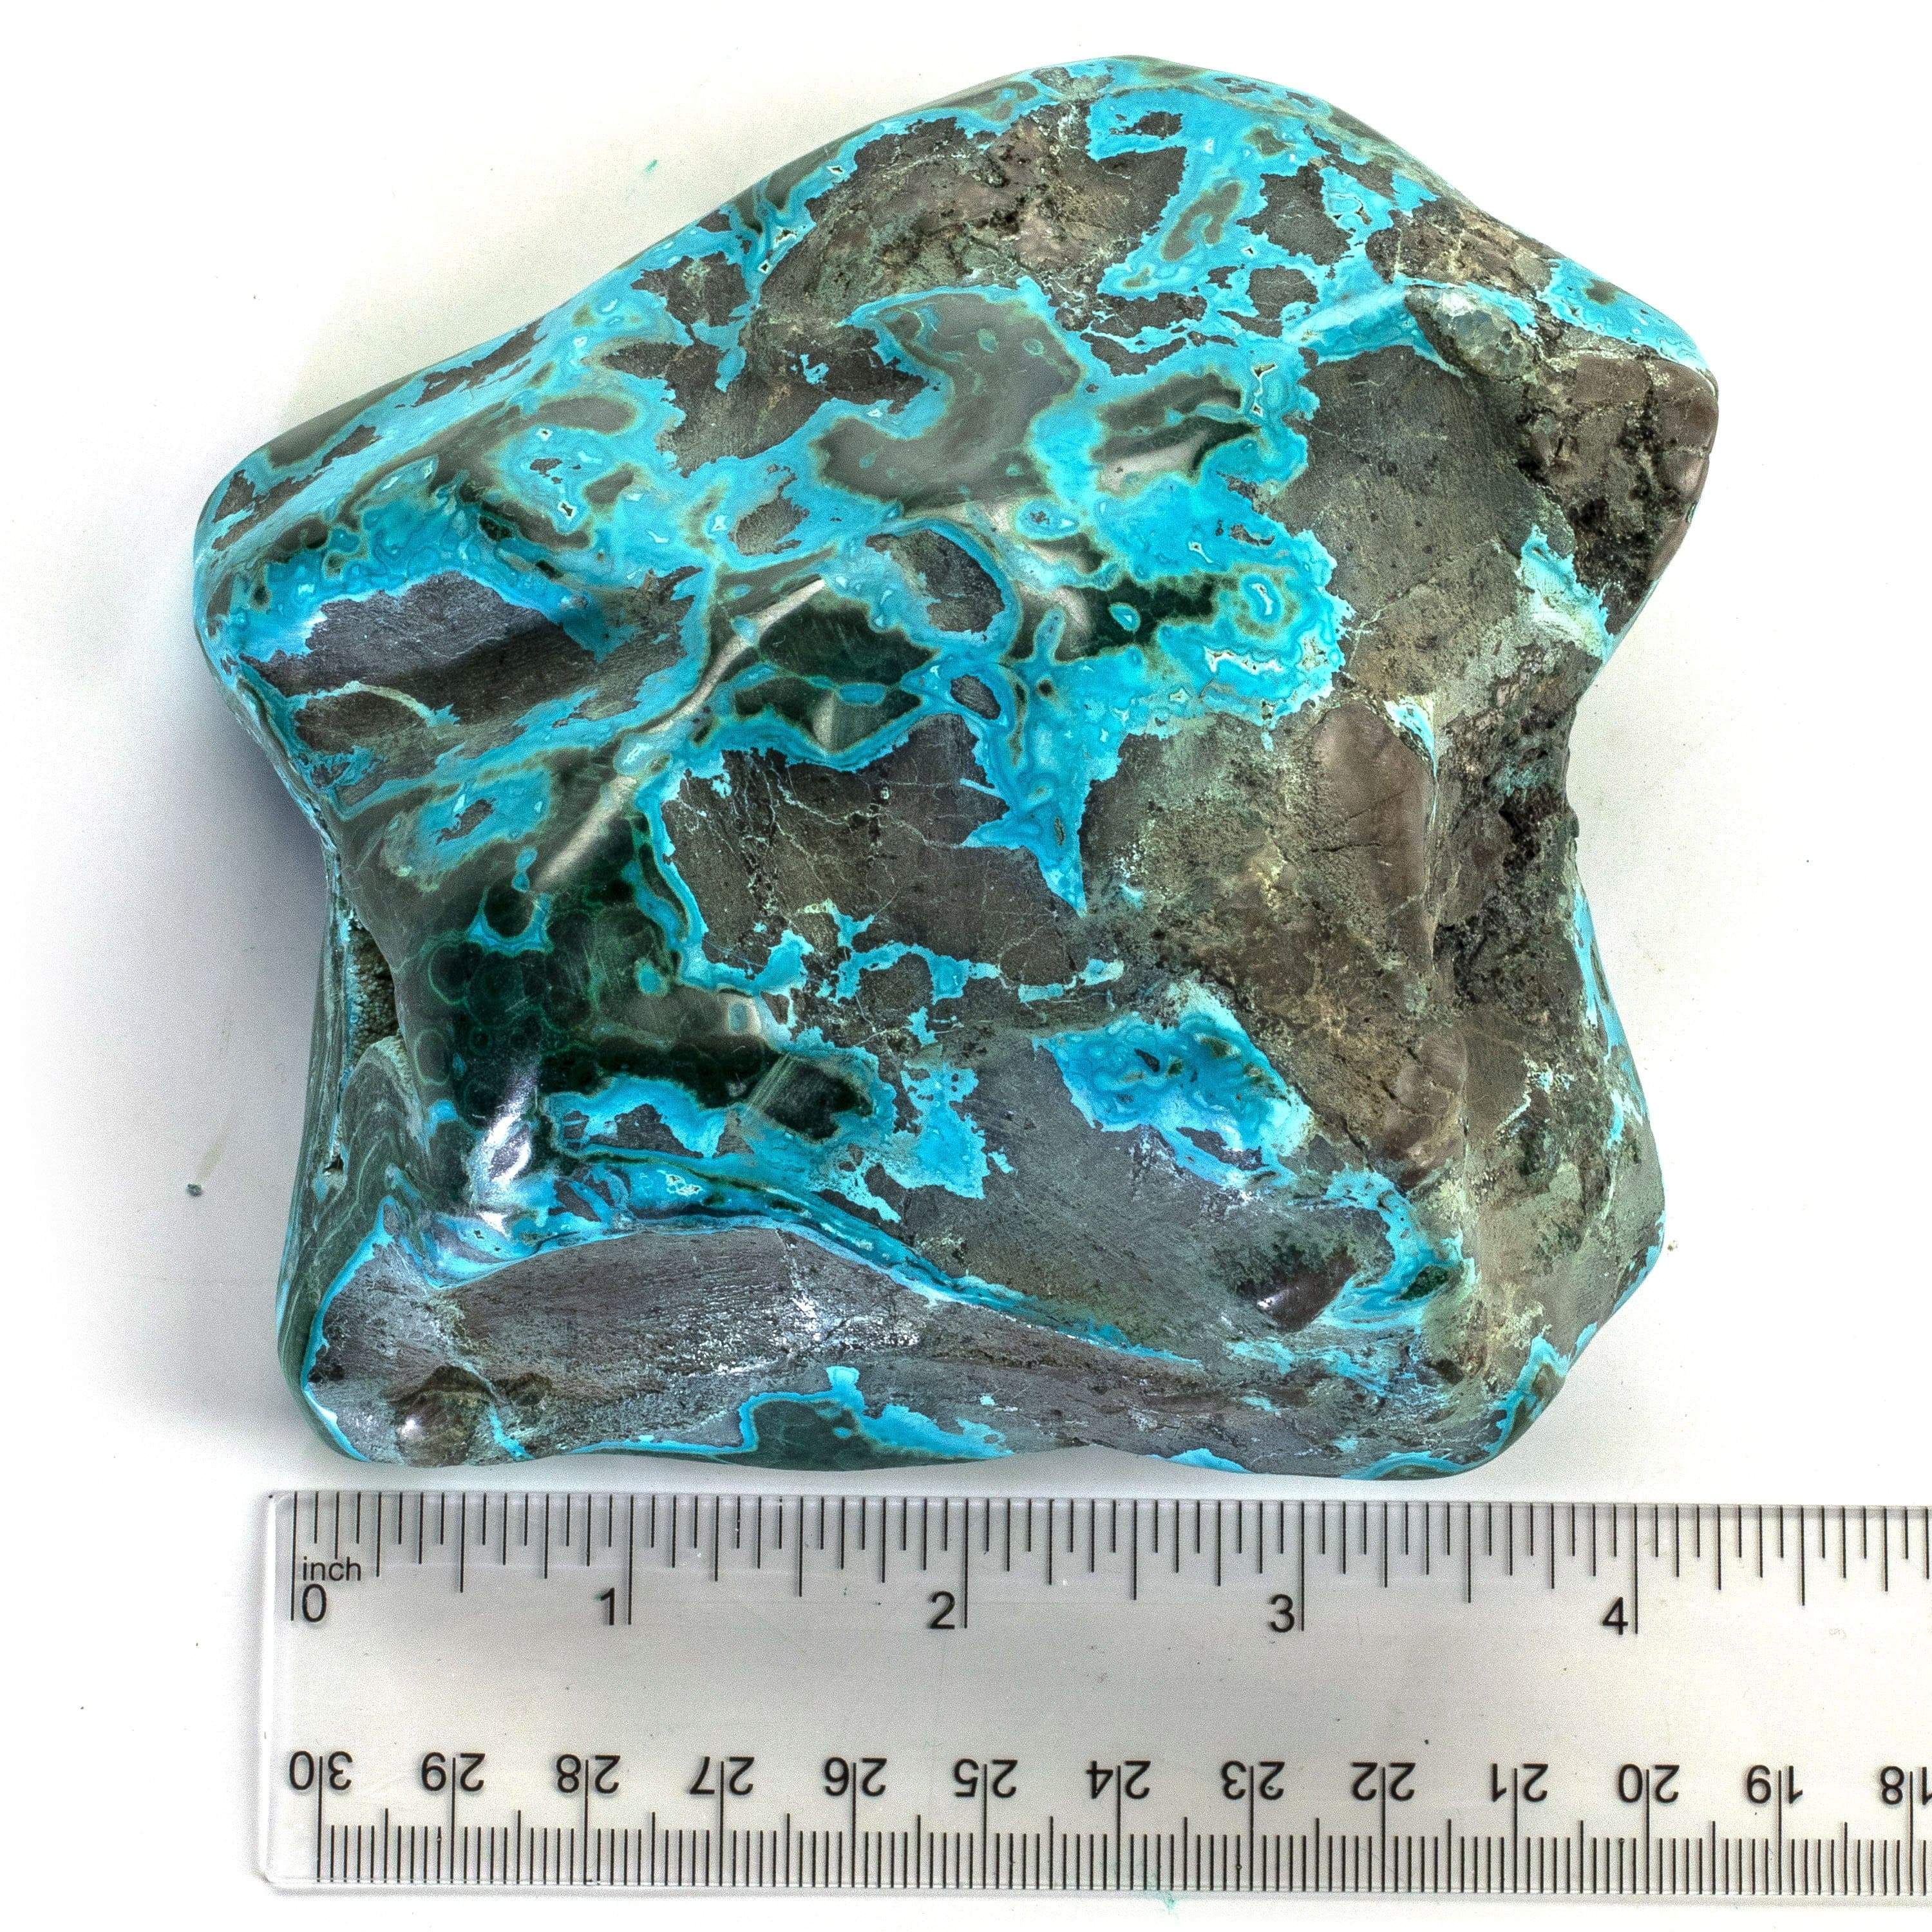 Kalifano Malachite Rare Natural Green Malachite with Blue Chrysocolla Freeform Specimen from Congo - 0.9 kg / 1.9 lbs MAC900.003